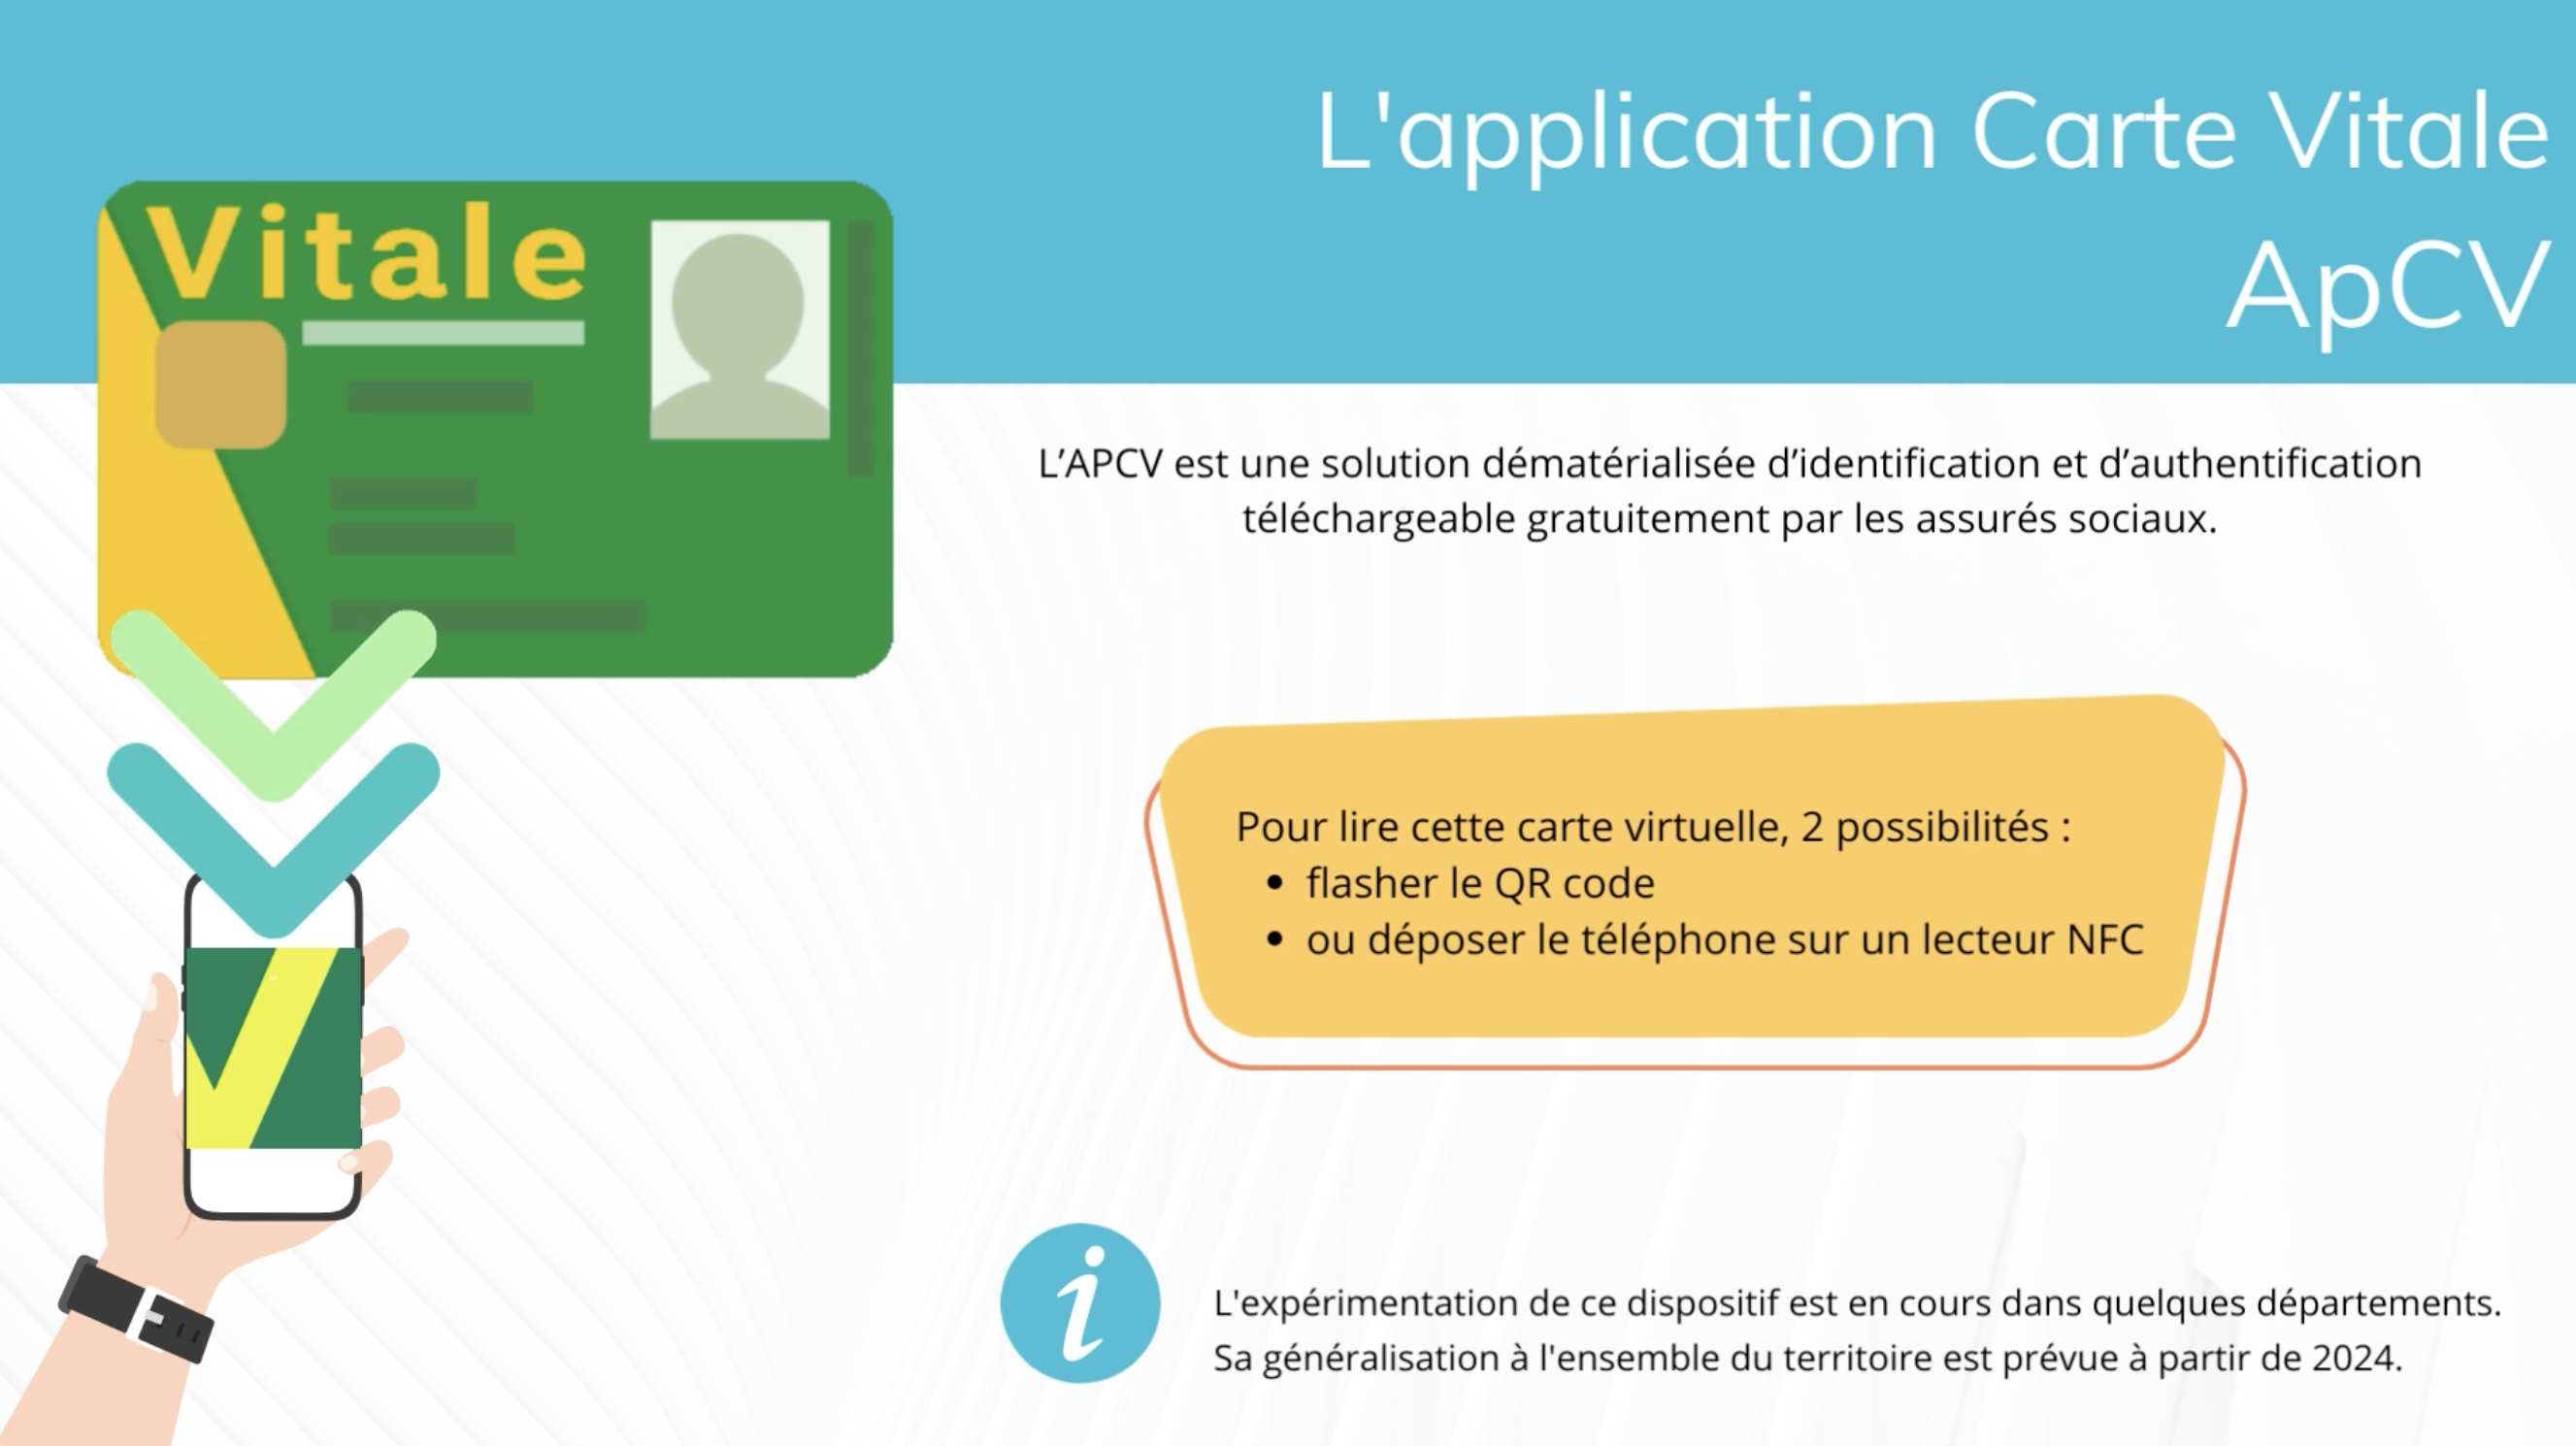 Application Carte Vitale - ApCV